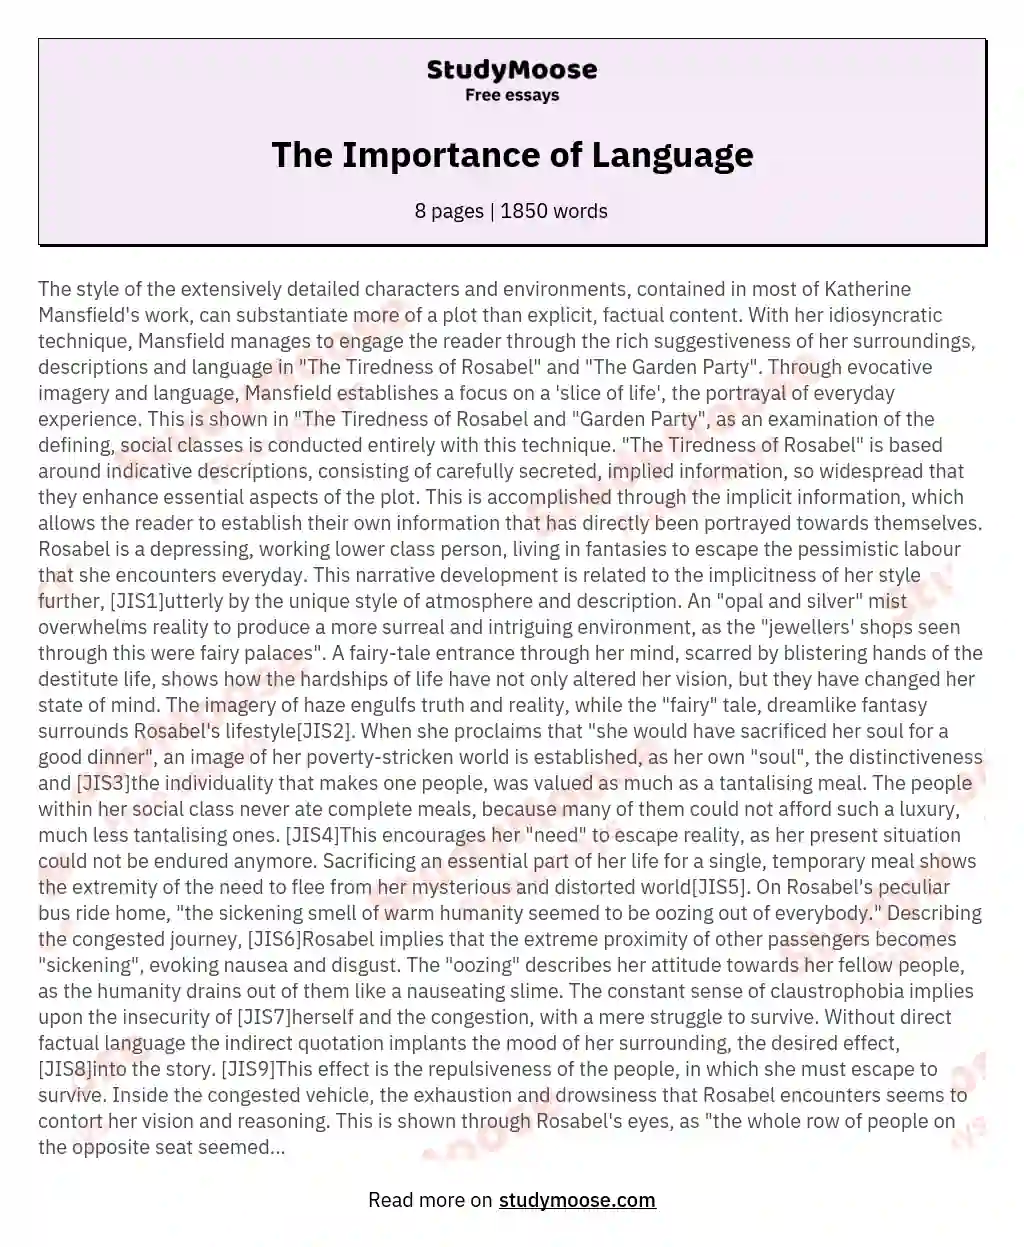 The Importance of Language essay